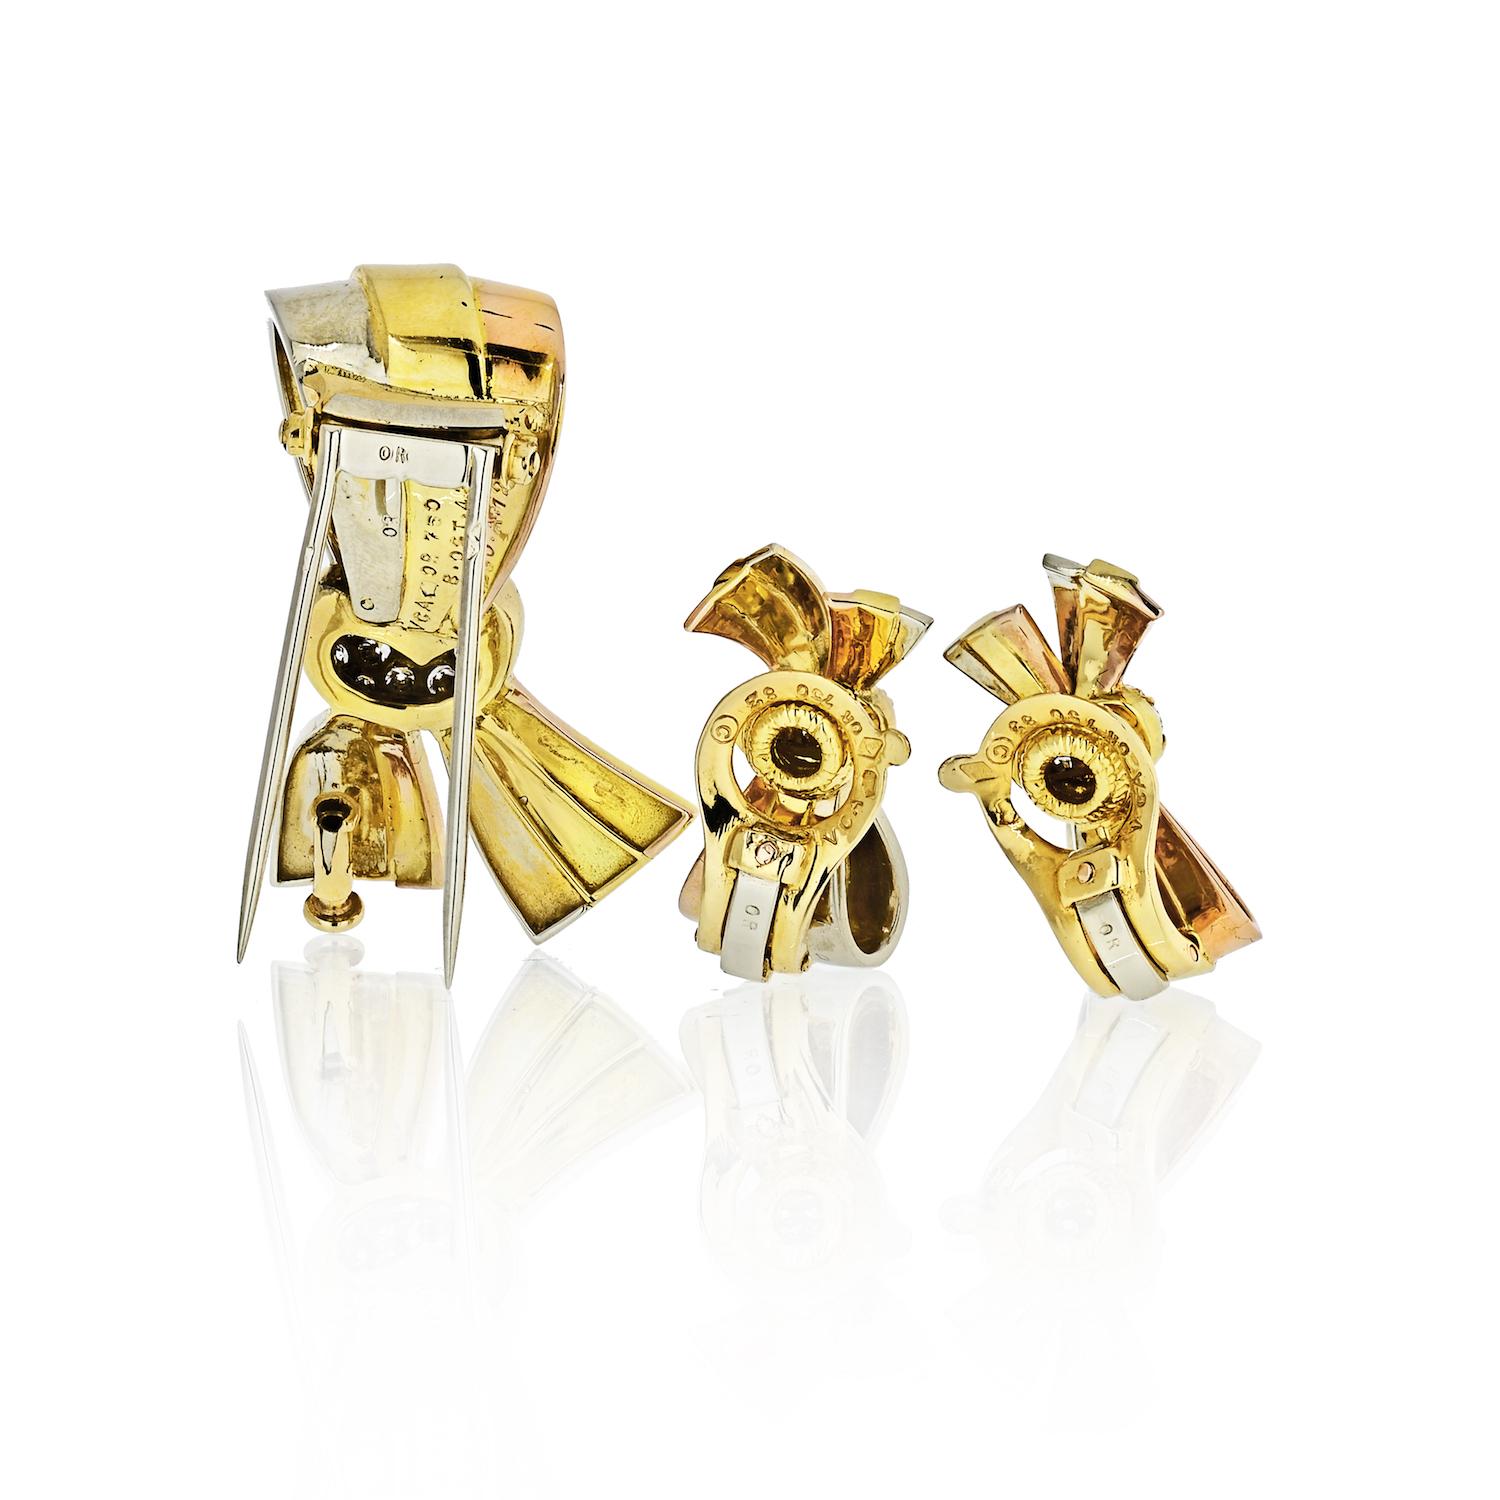 Round Cut Van Cleef & Arpels Bow 18K Tri Color Earrings and Brooch Diamond Jewelry Set